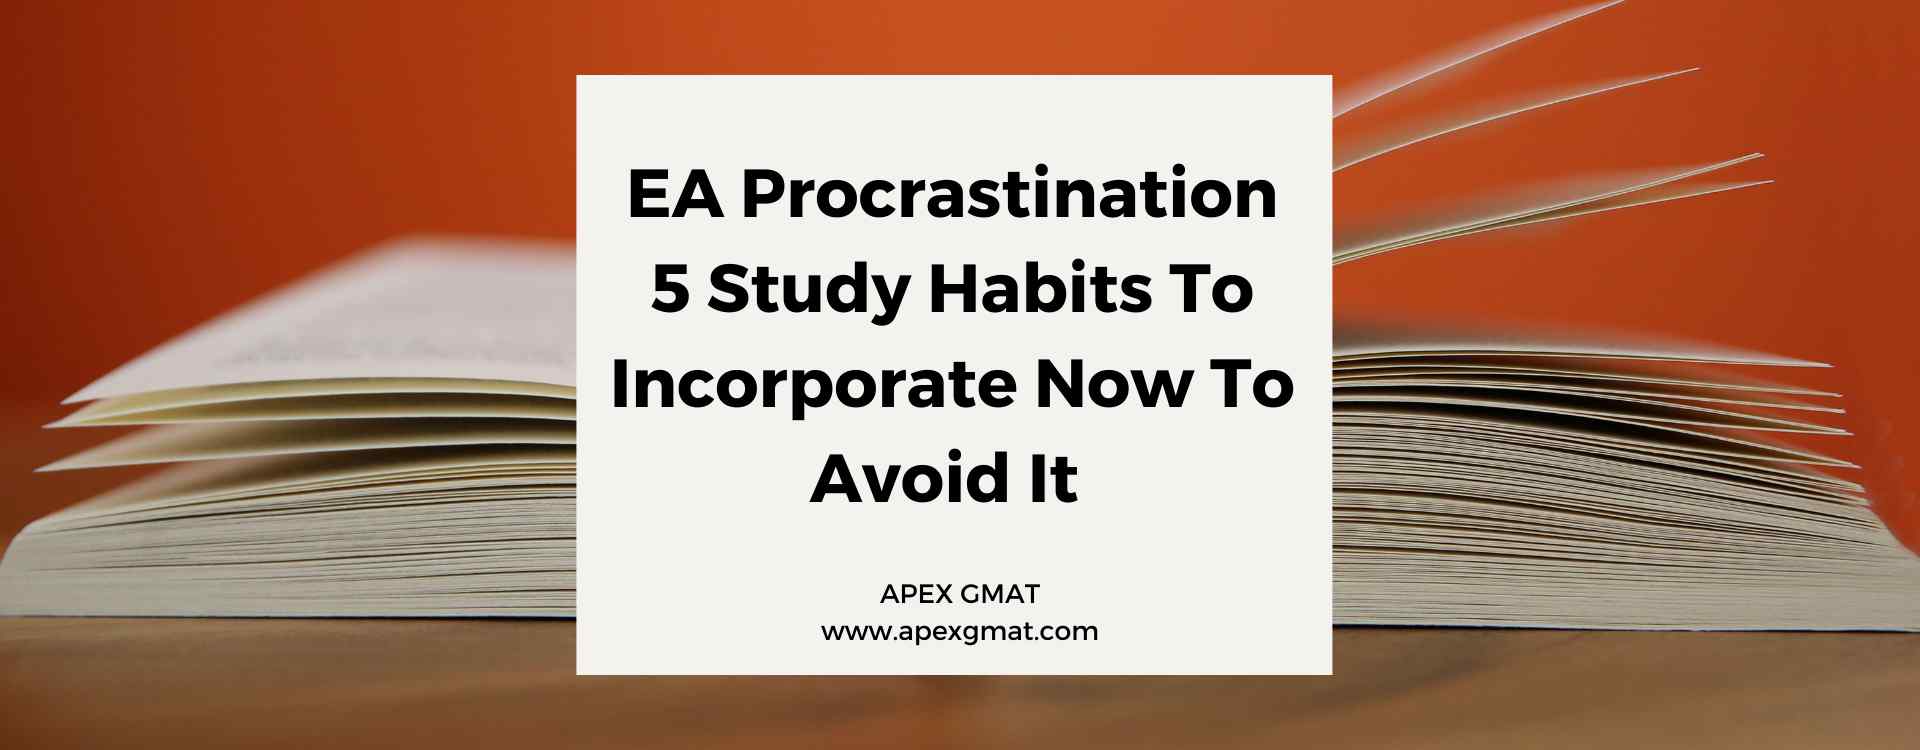 5 EA Study Habits To Incorporate Now To Avoid Procrastination